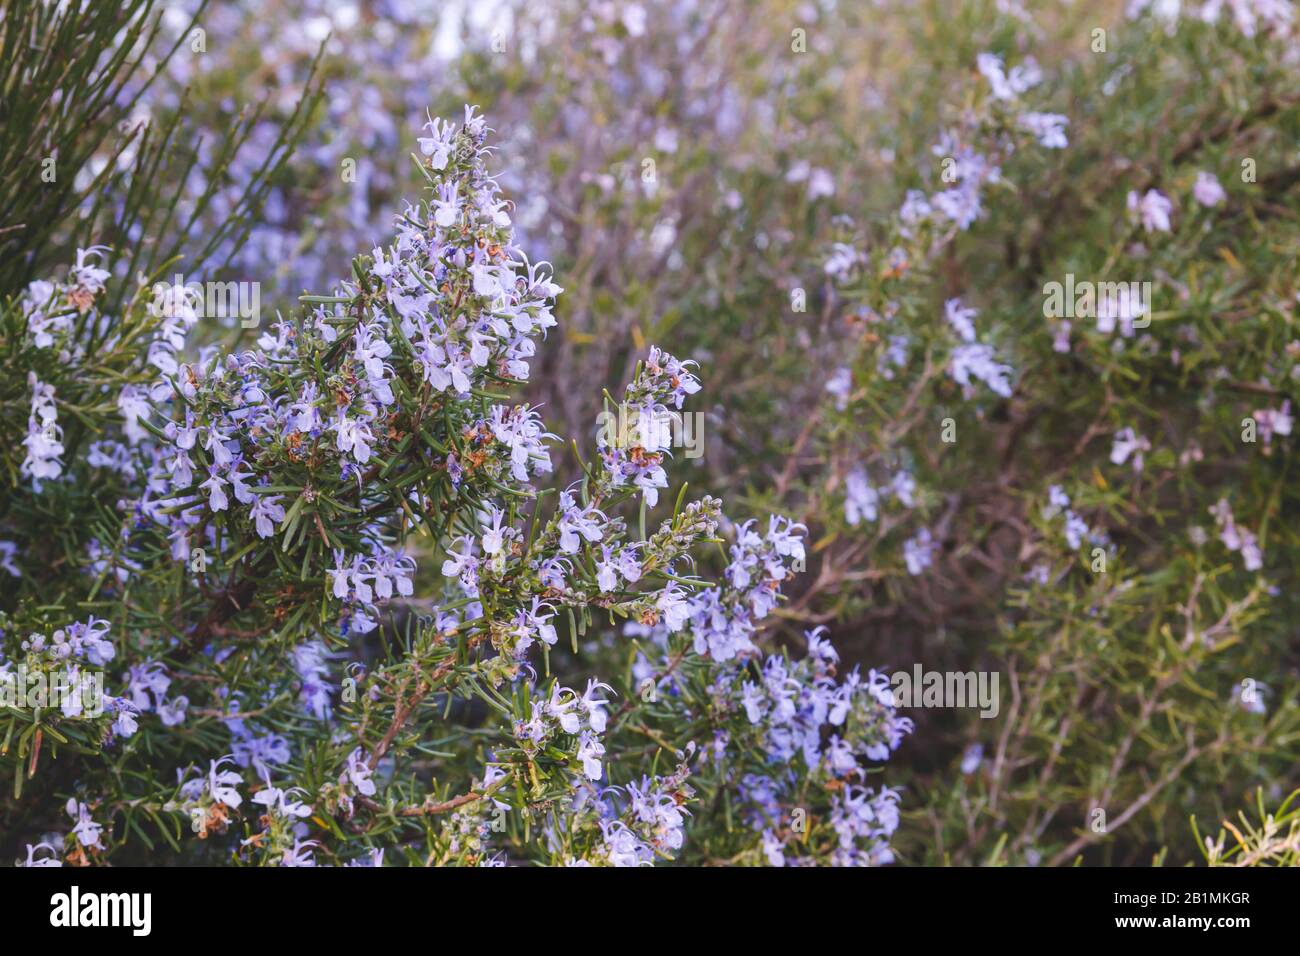 Rosemary purple flowers blooming in spring Stock Photo